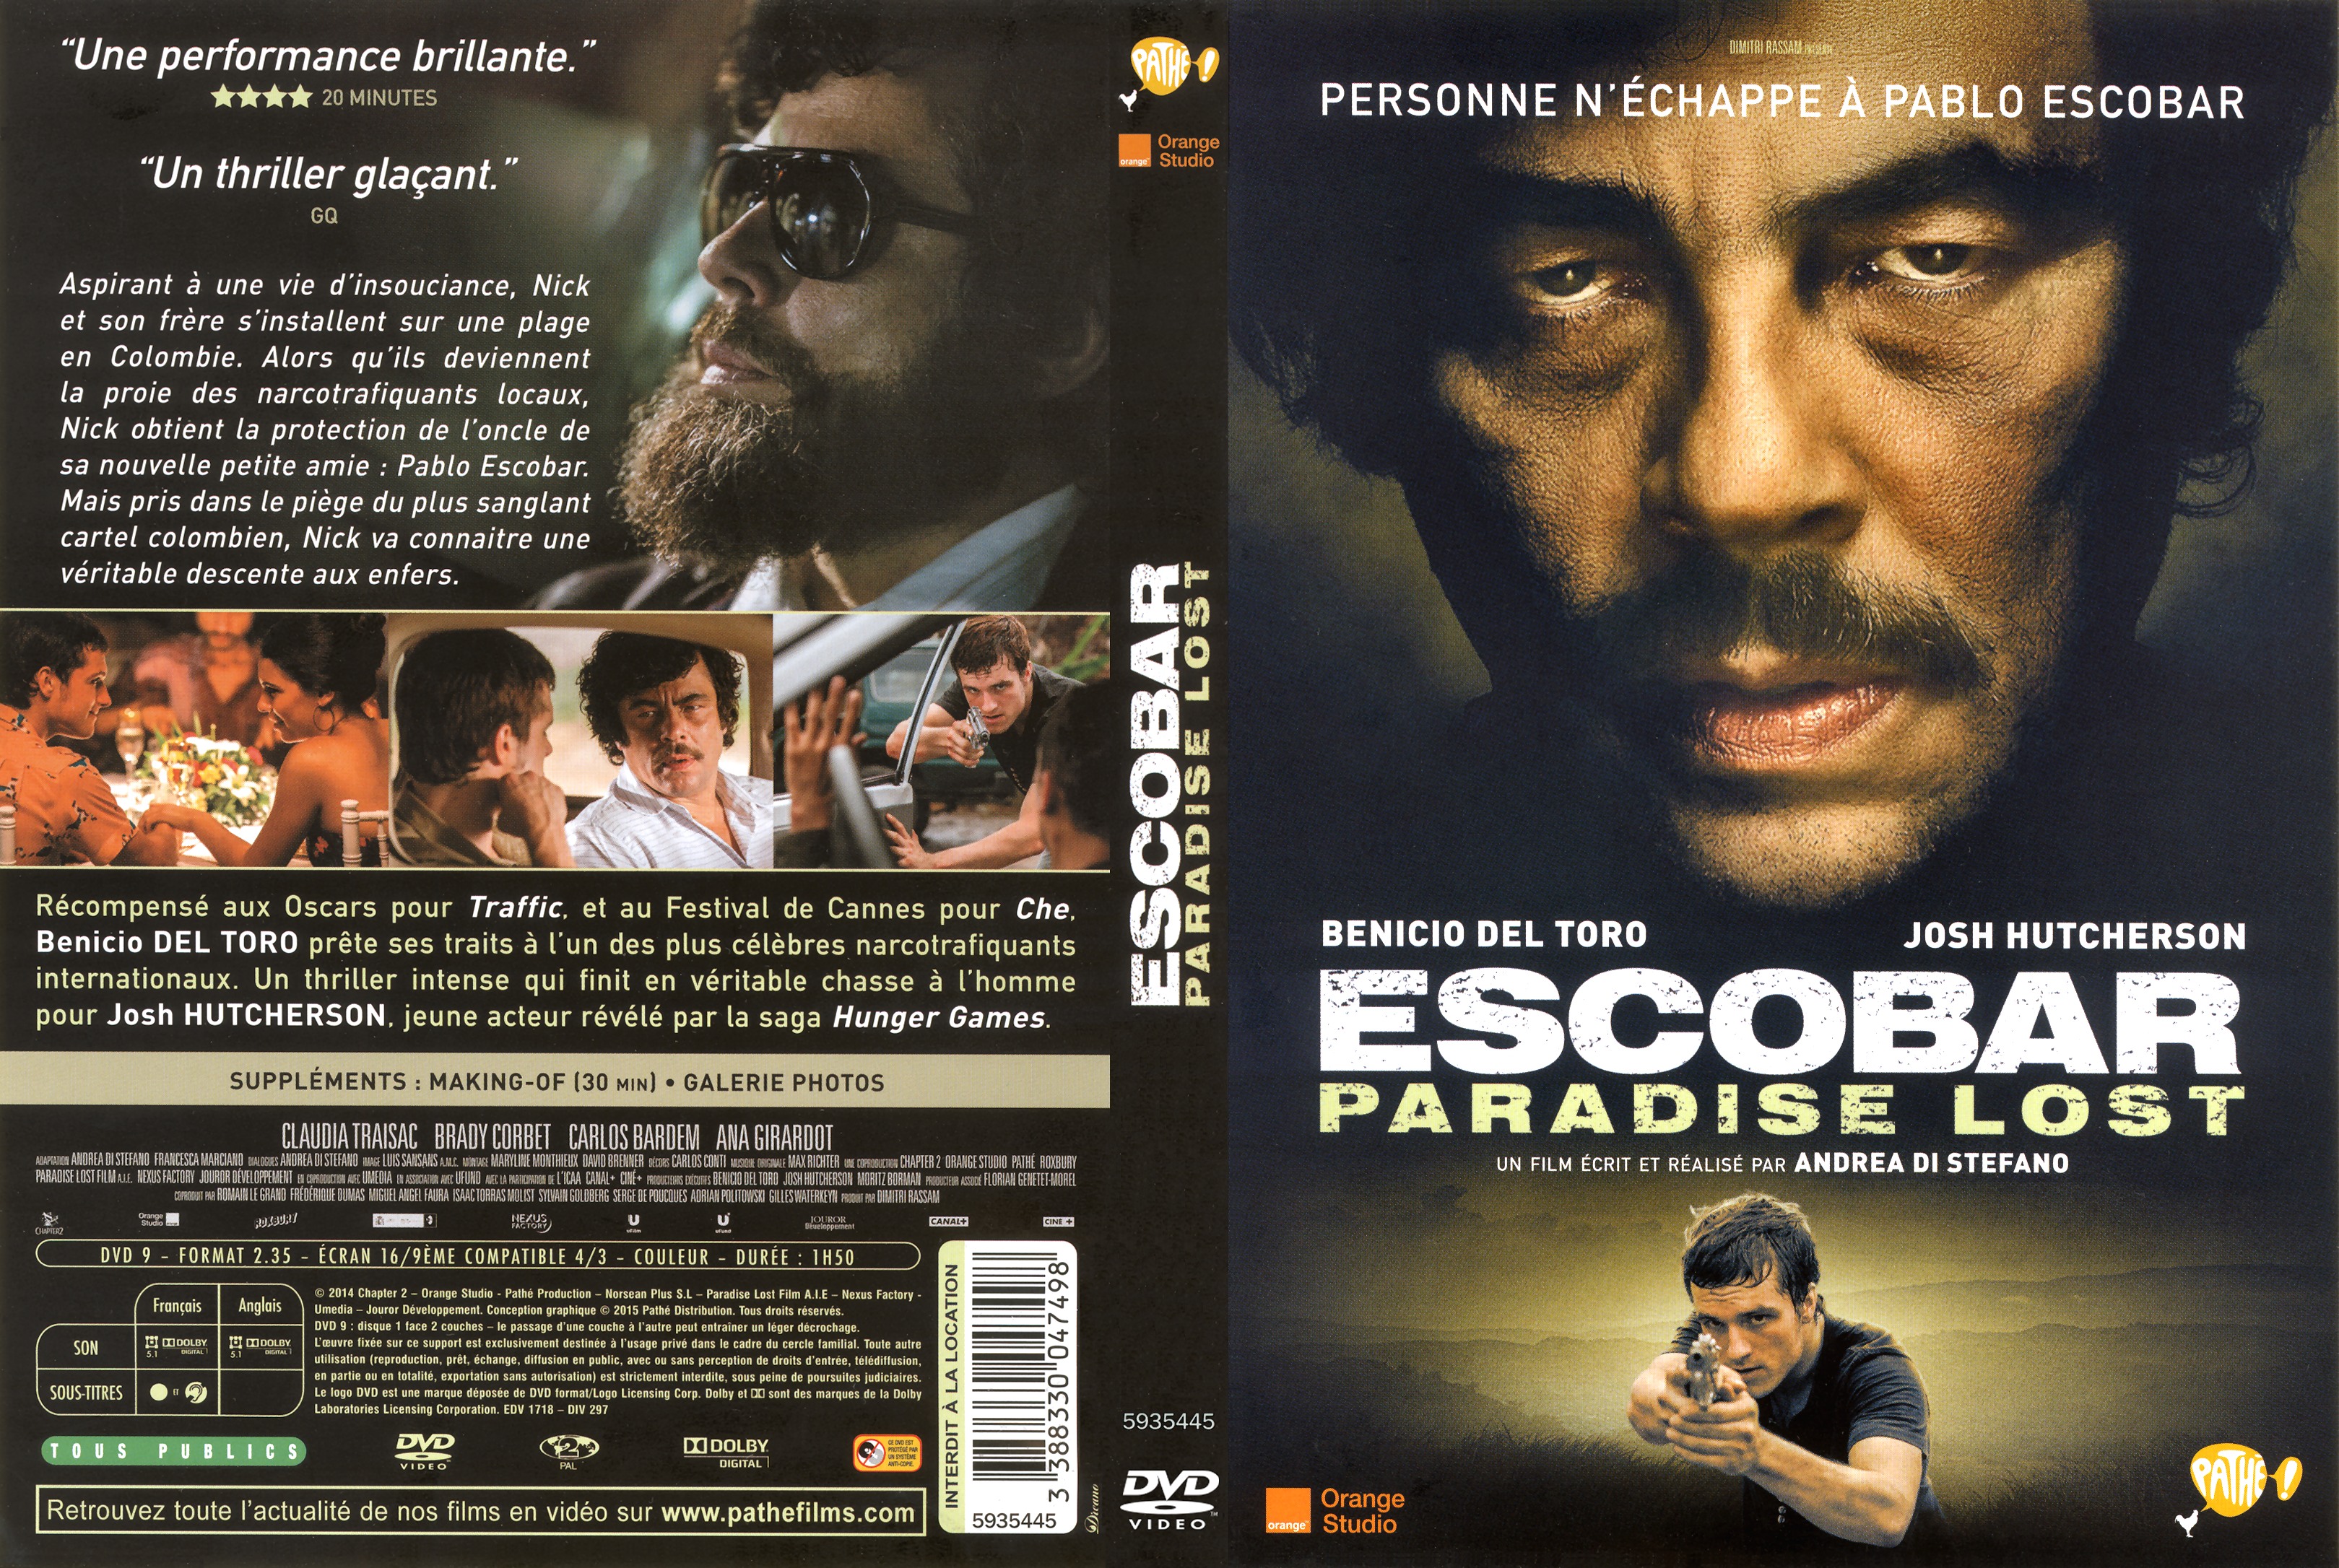 Jaquette DVD Escobar Paradise Lost